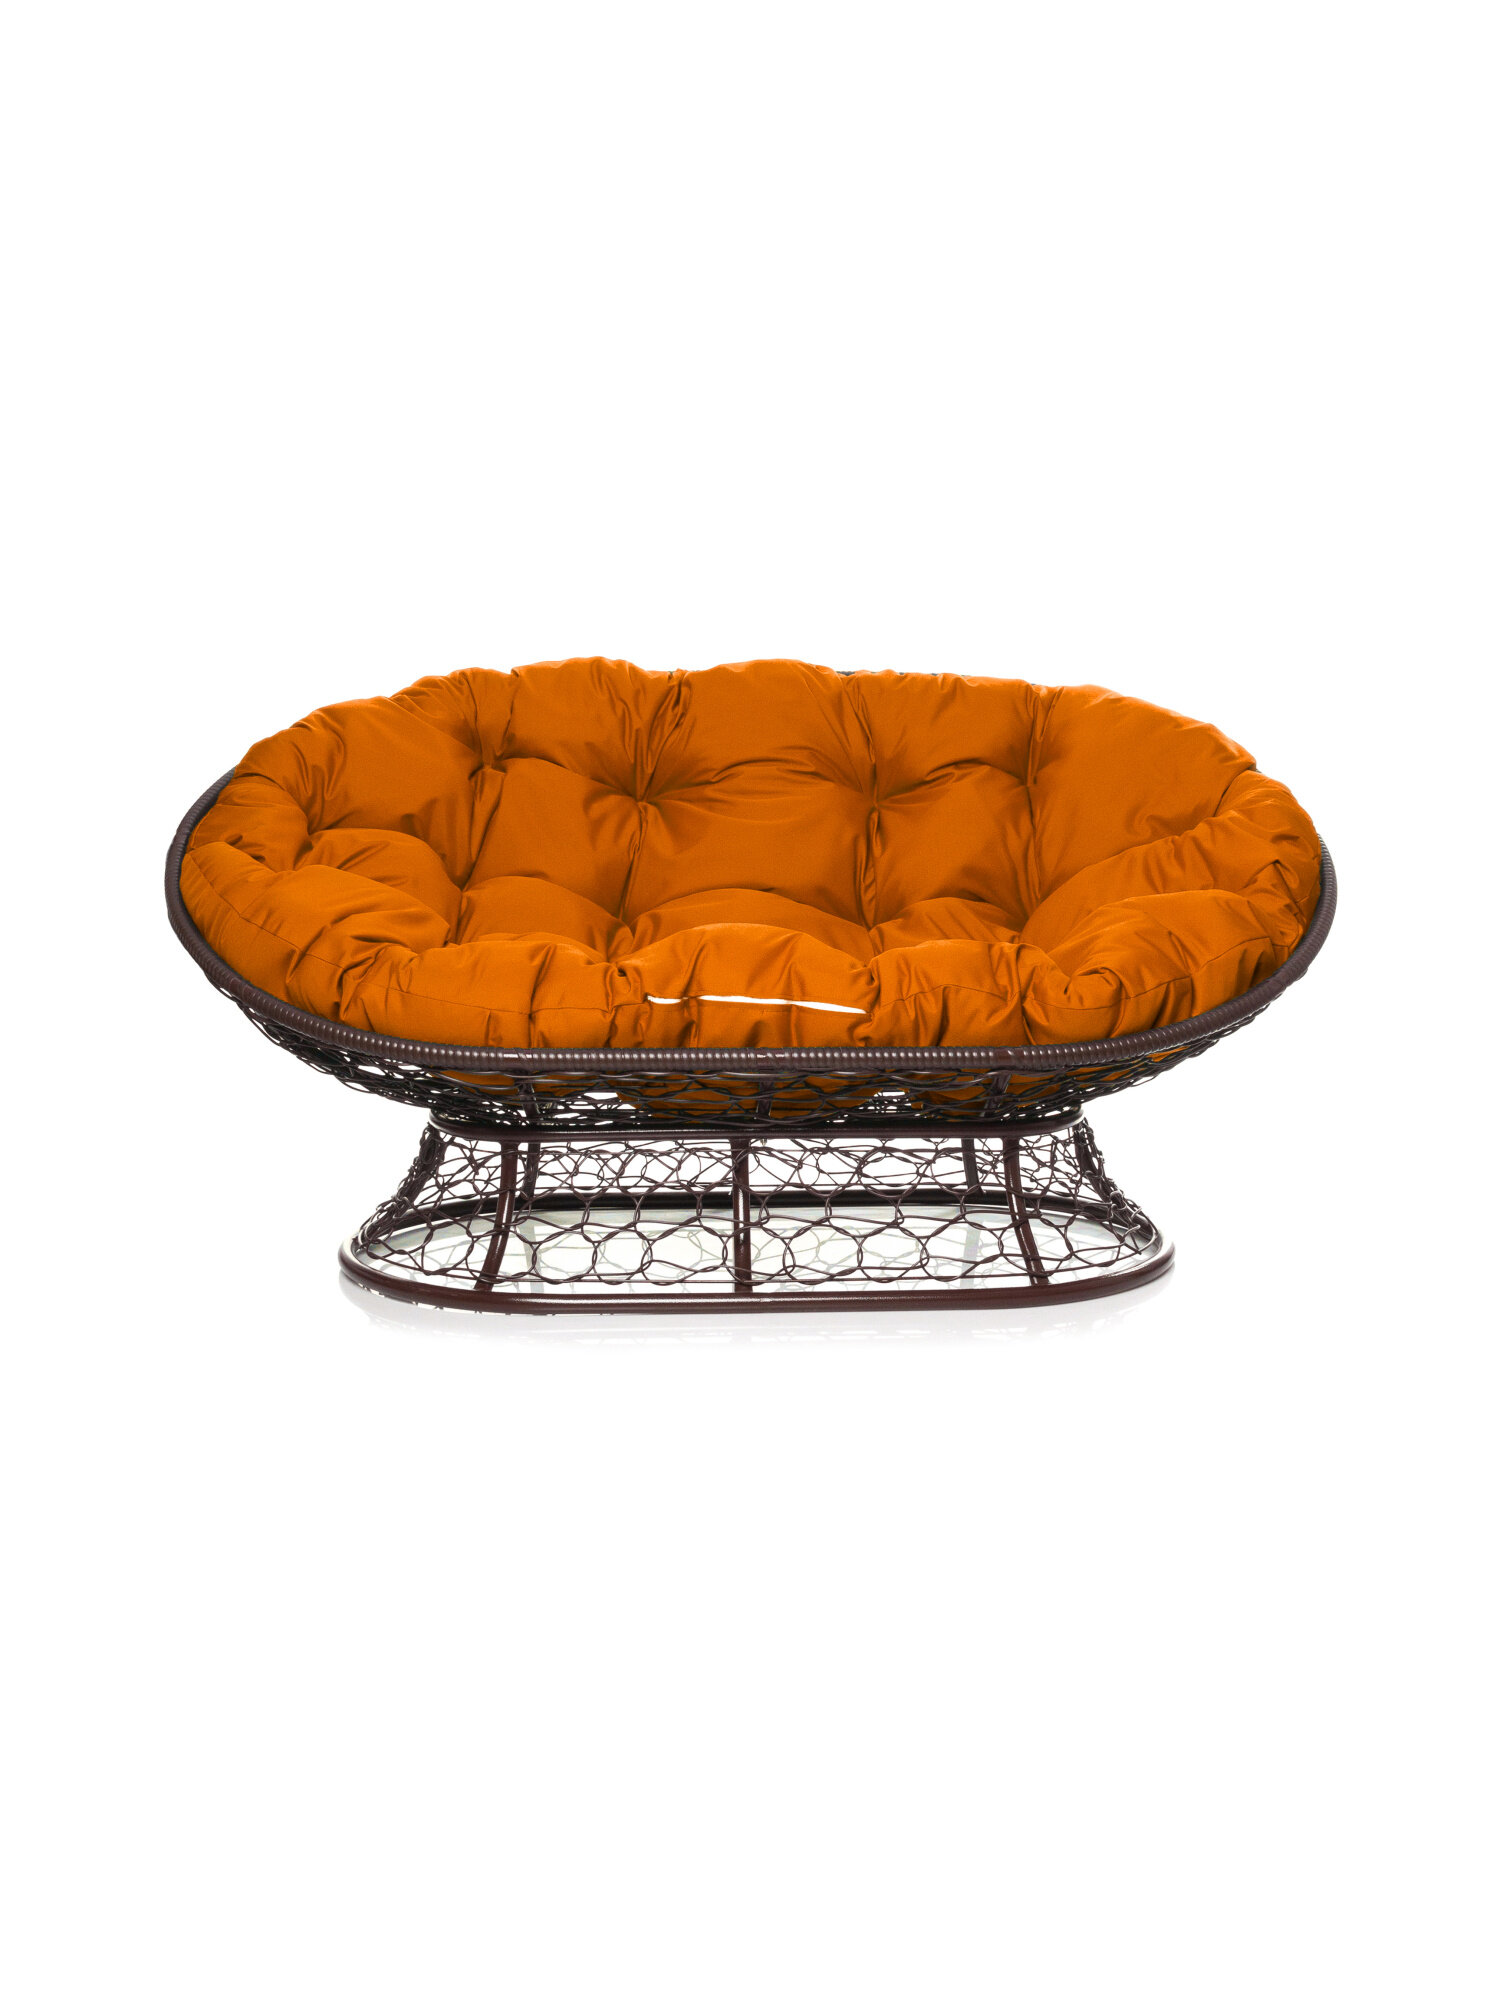 Диван M-group мамасан с ротангом коричневое оранжевая подушка